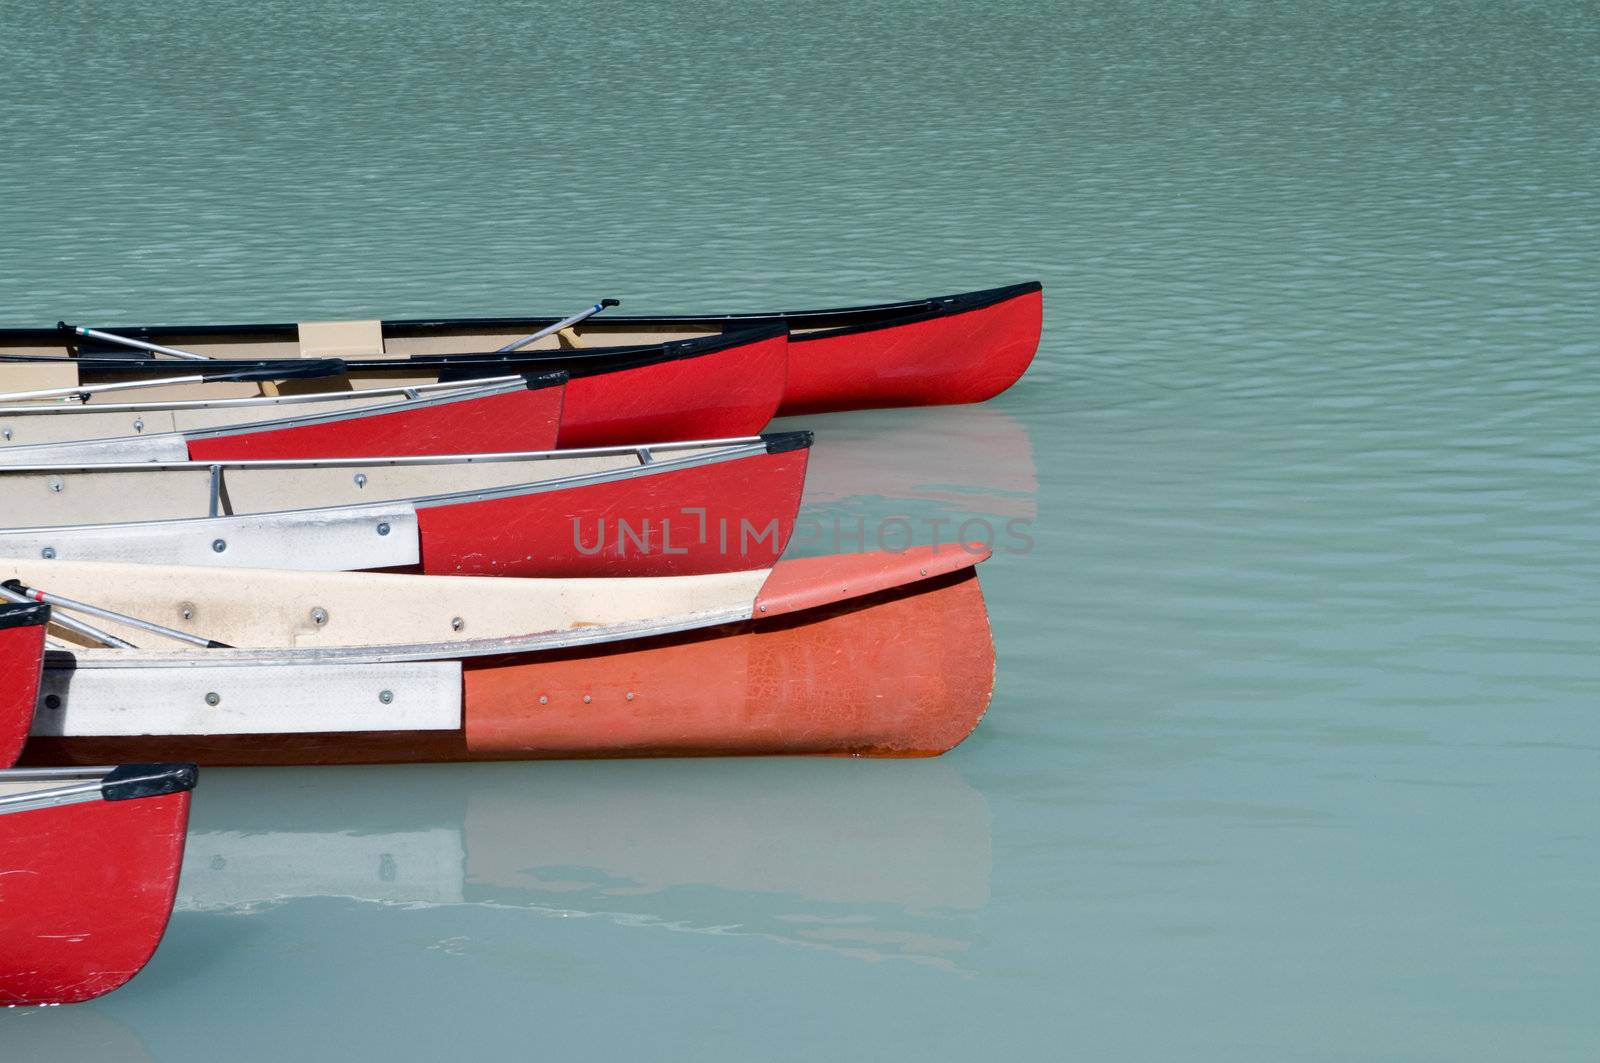 Canoes on Emerald Lake by Gordo25